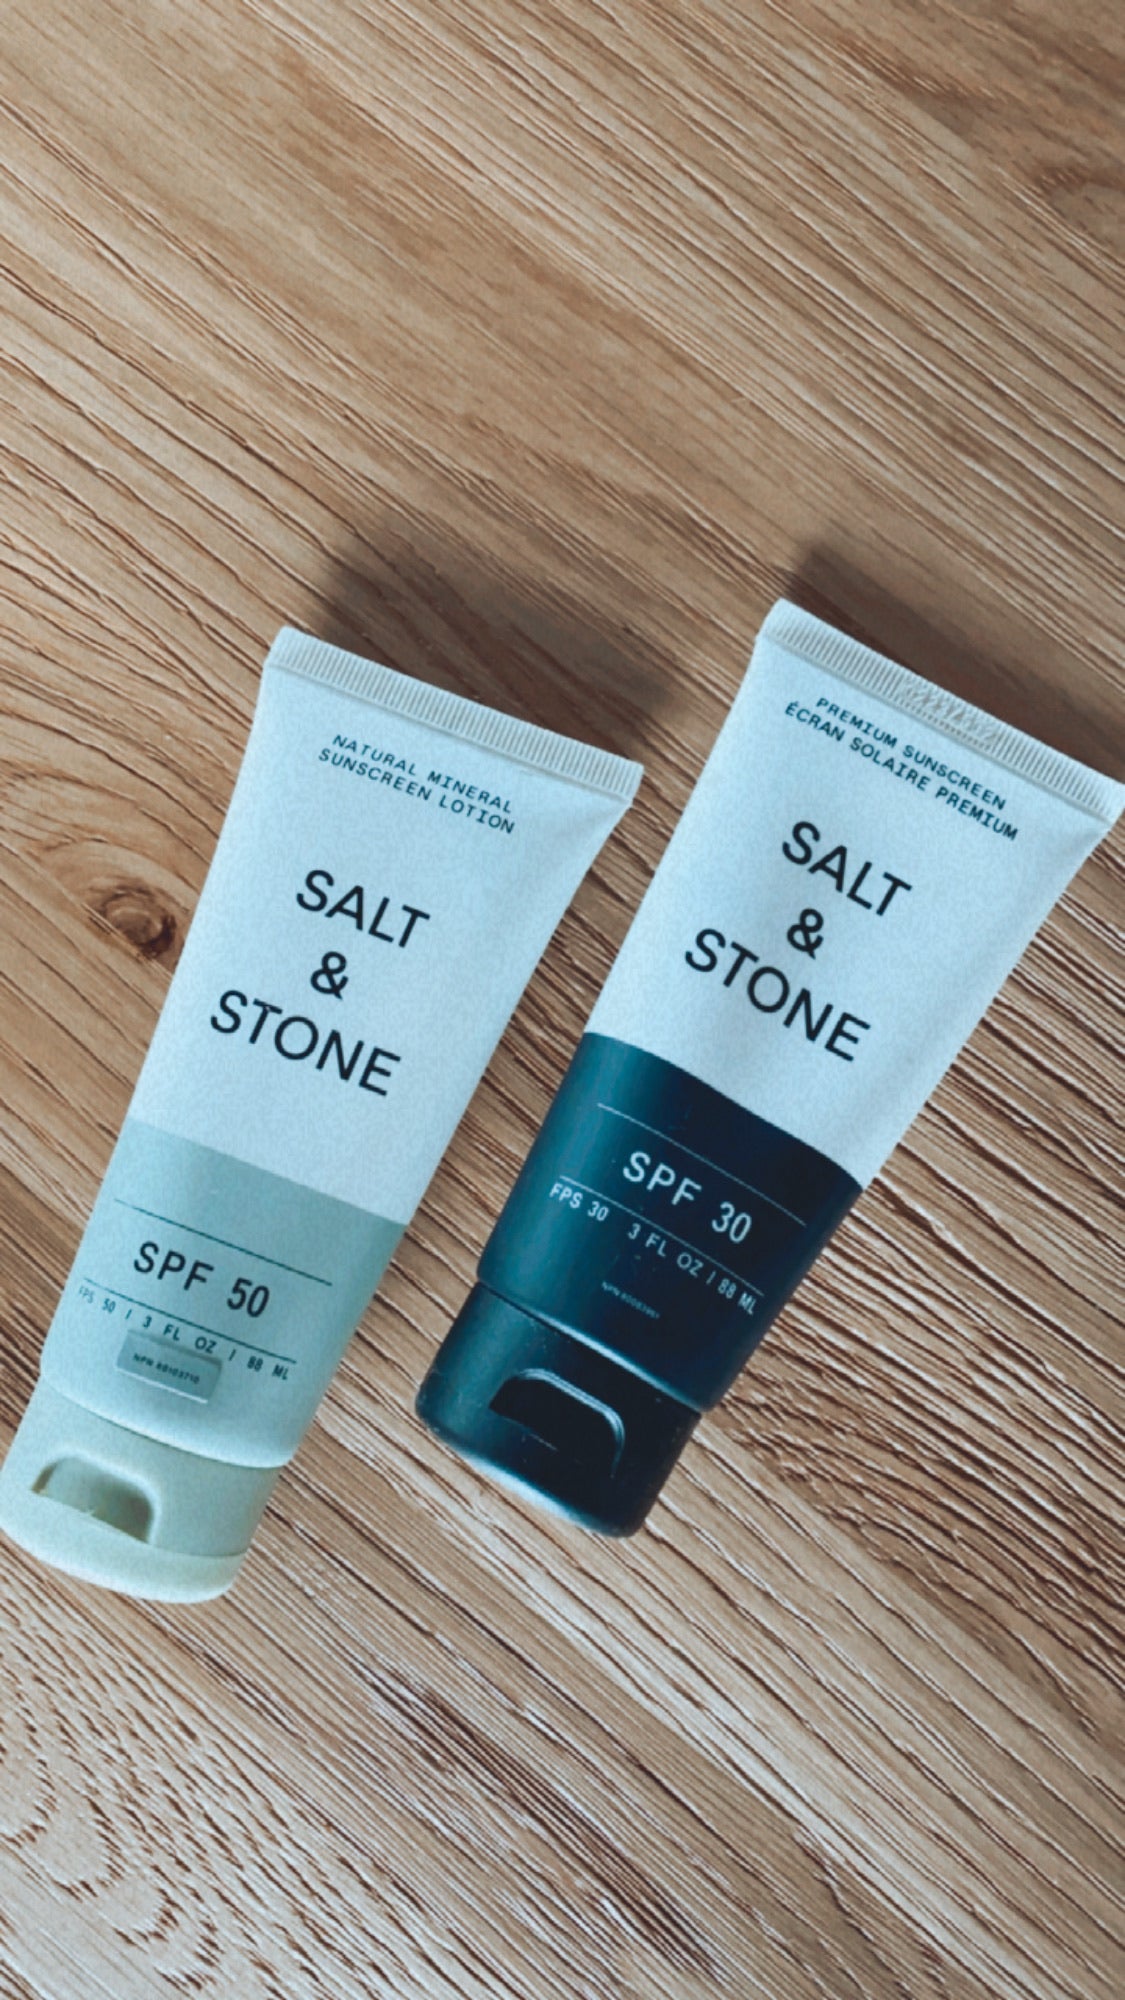 Salt + Stone Sunscreen Products